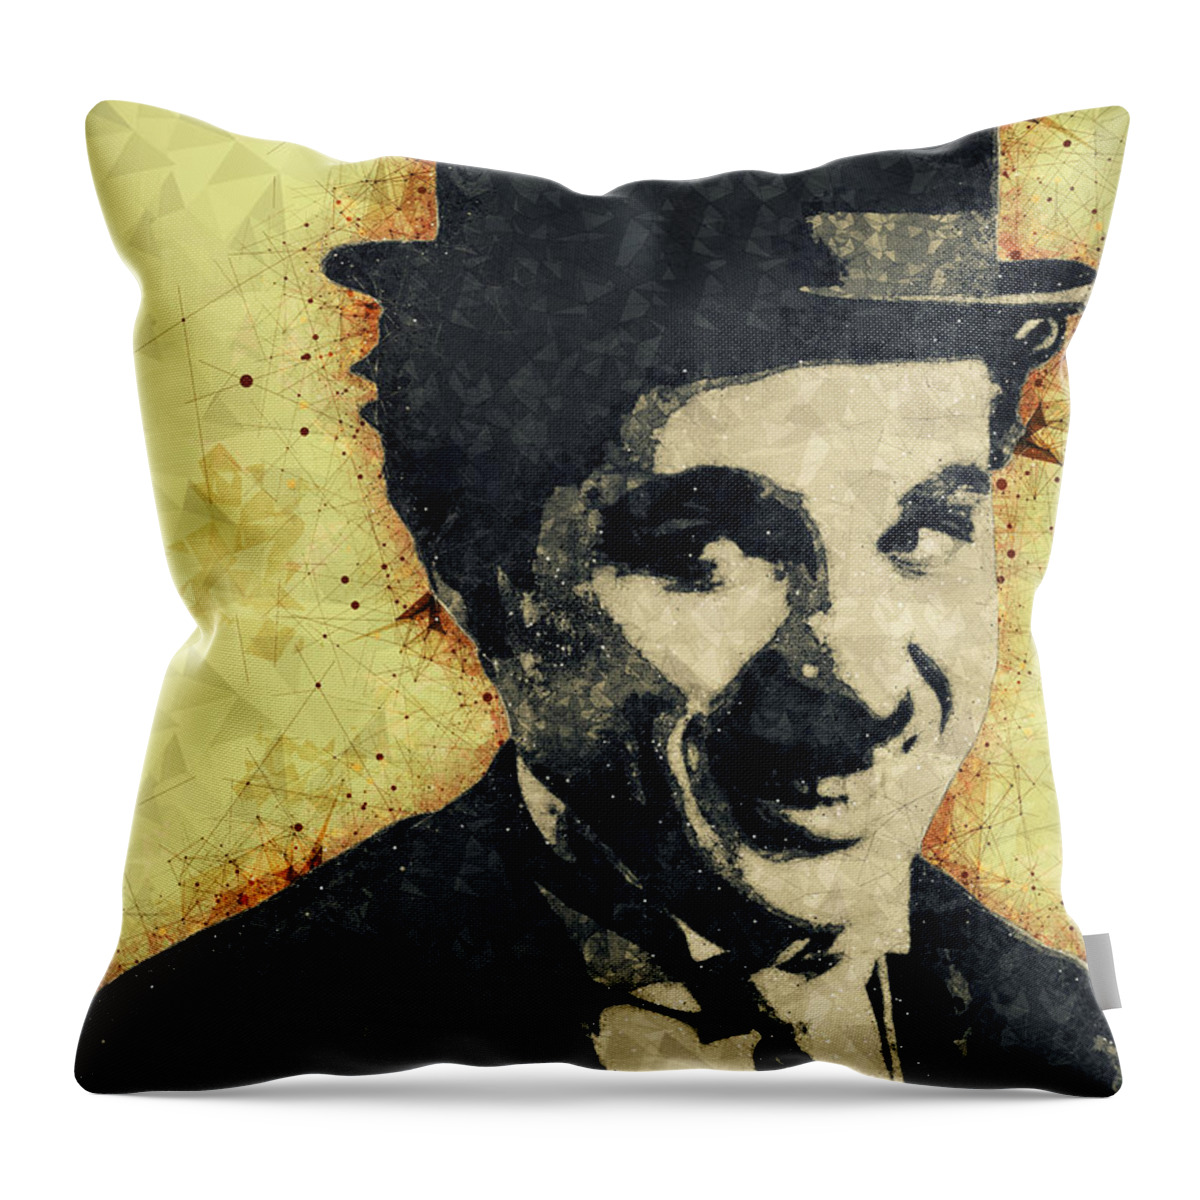 Charlie Chaplin Throw Pillow featuring the mixed media Charlie Chaplin Illustration by Studio Grafiikka